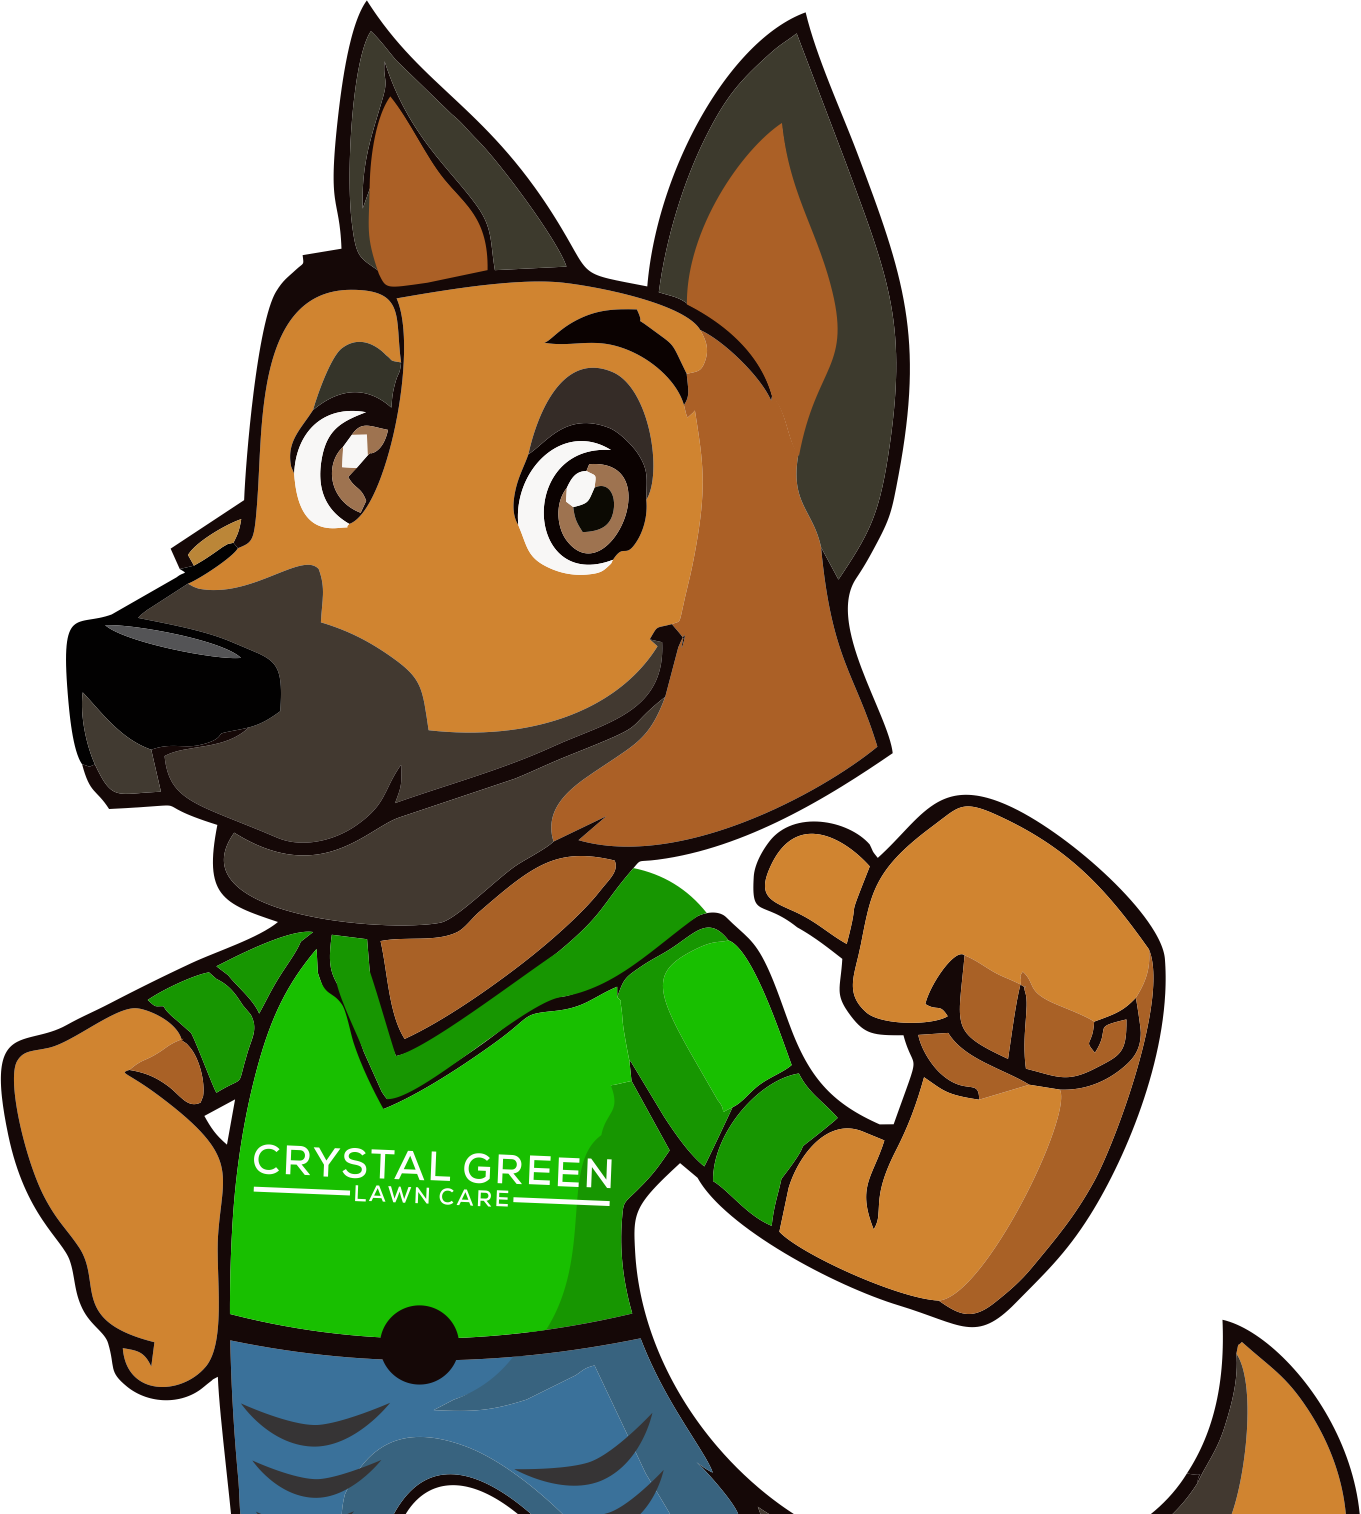 a cartoon dog wearing a green shirt that says crystal green